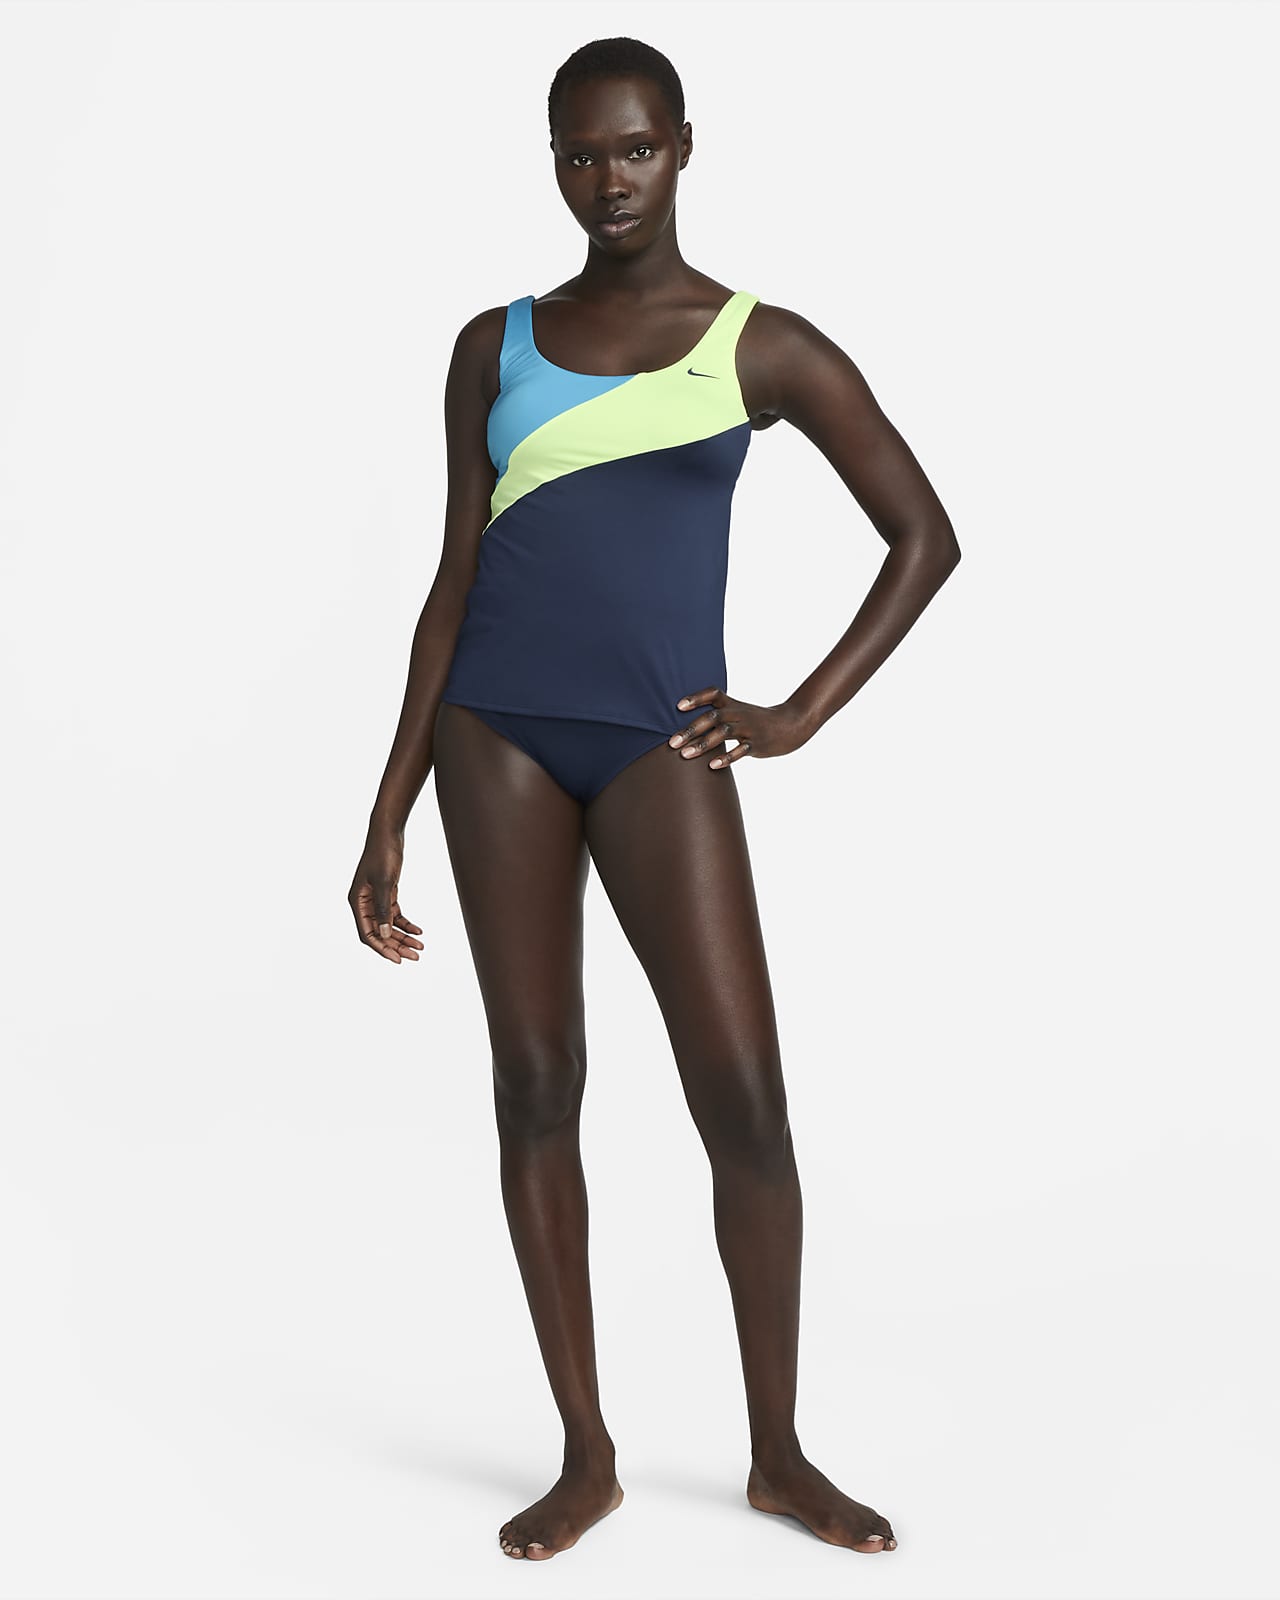 Nike Essential Women's High-Waisted Swim Bottoms